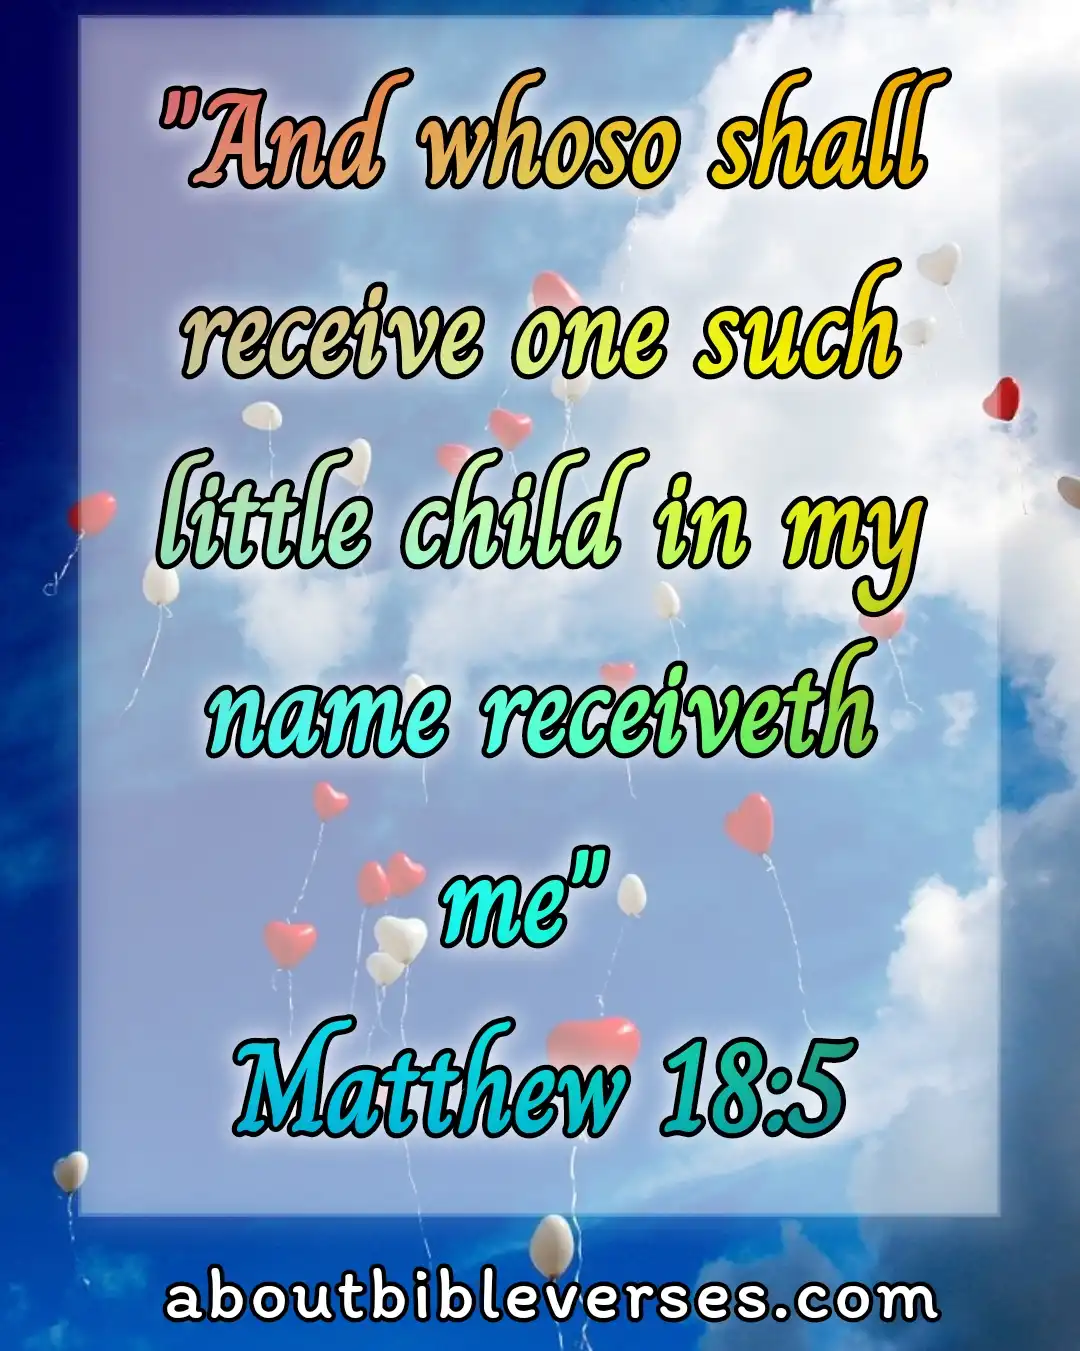 Today's bible verse (Matthew 18:5)